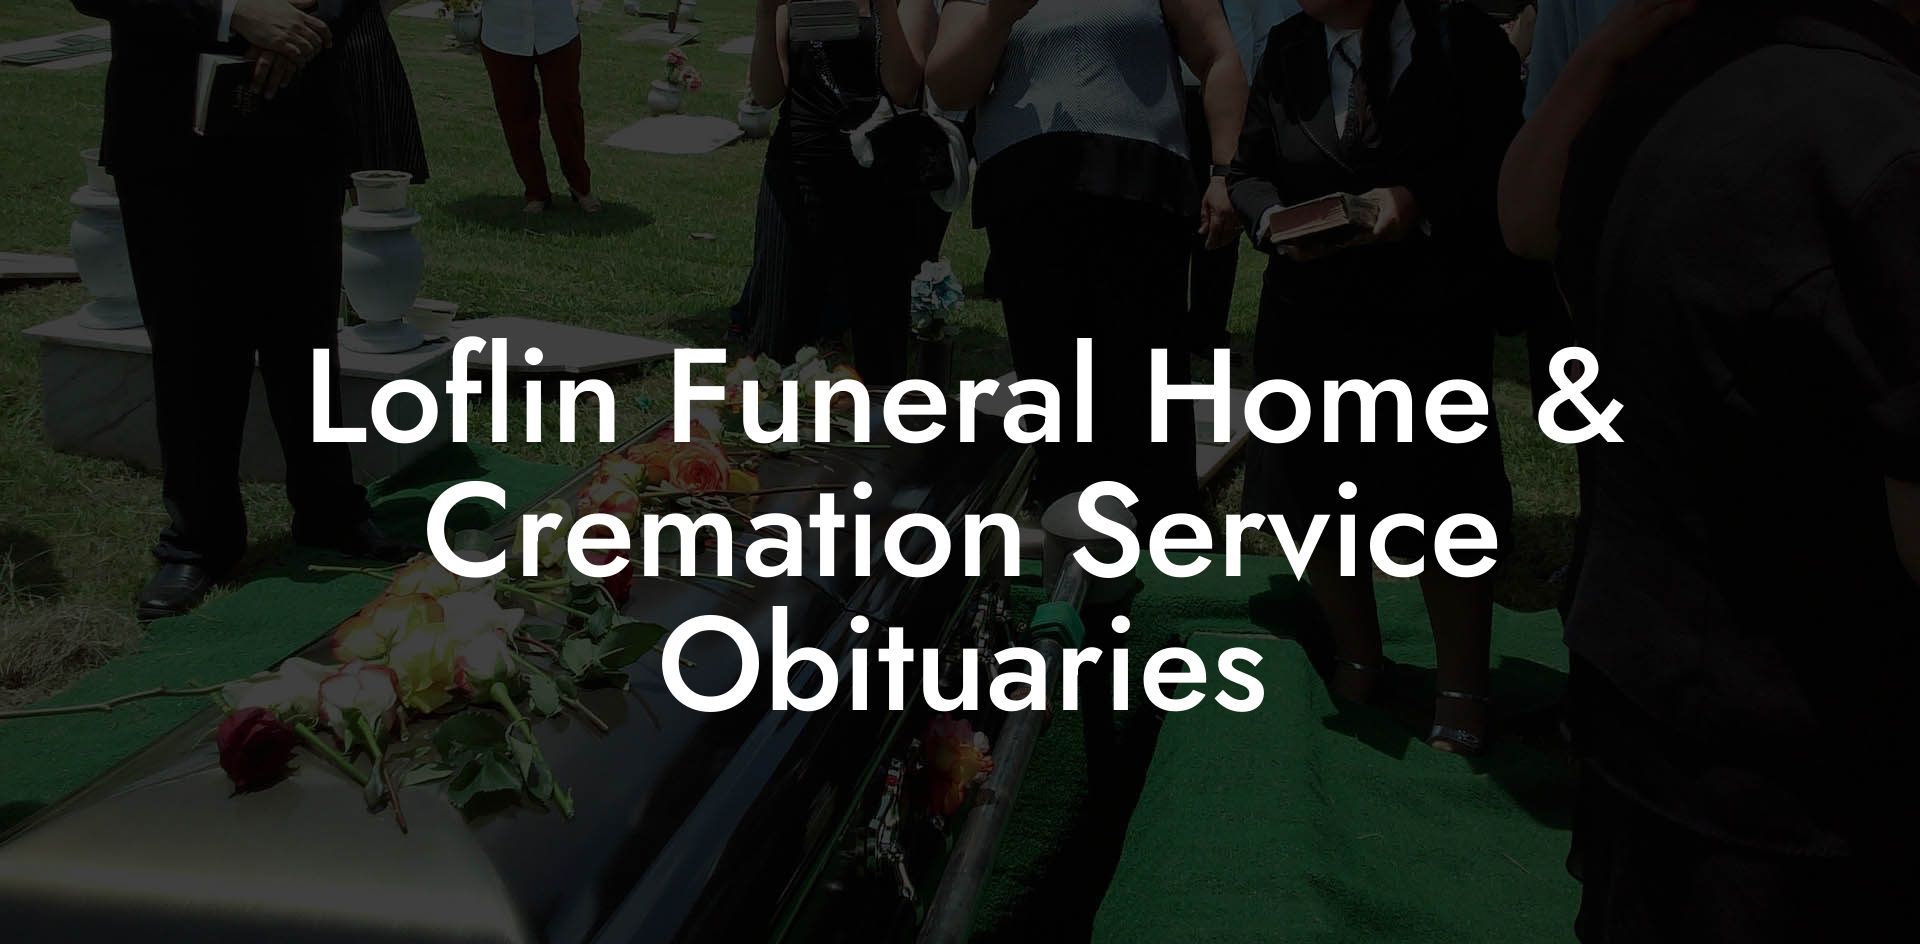 Loflin Funeral Home & Cremation Service Obituaries